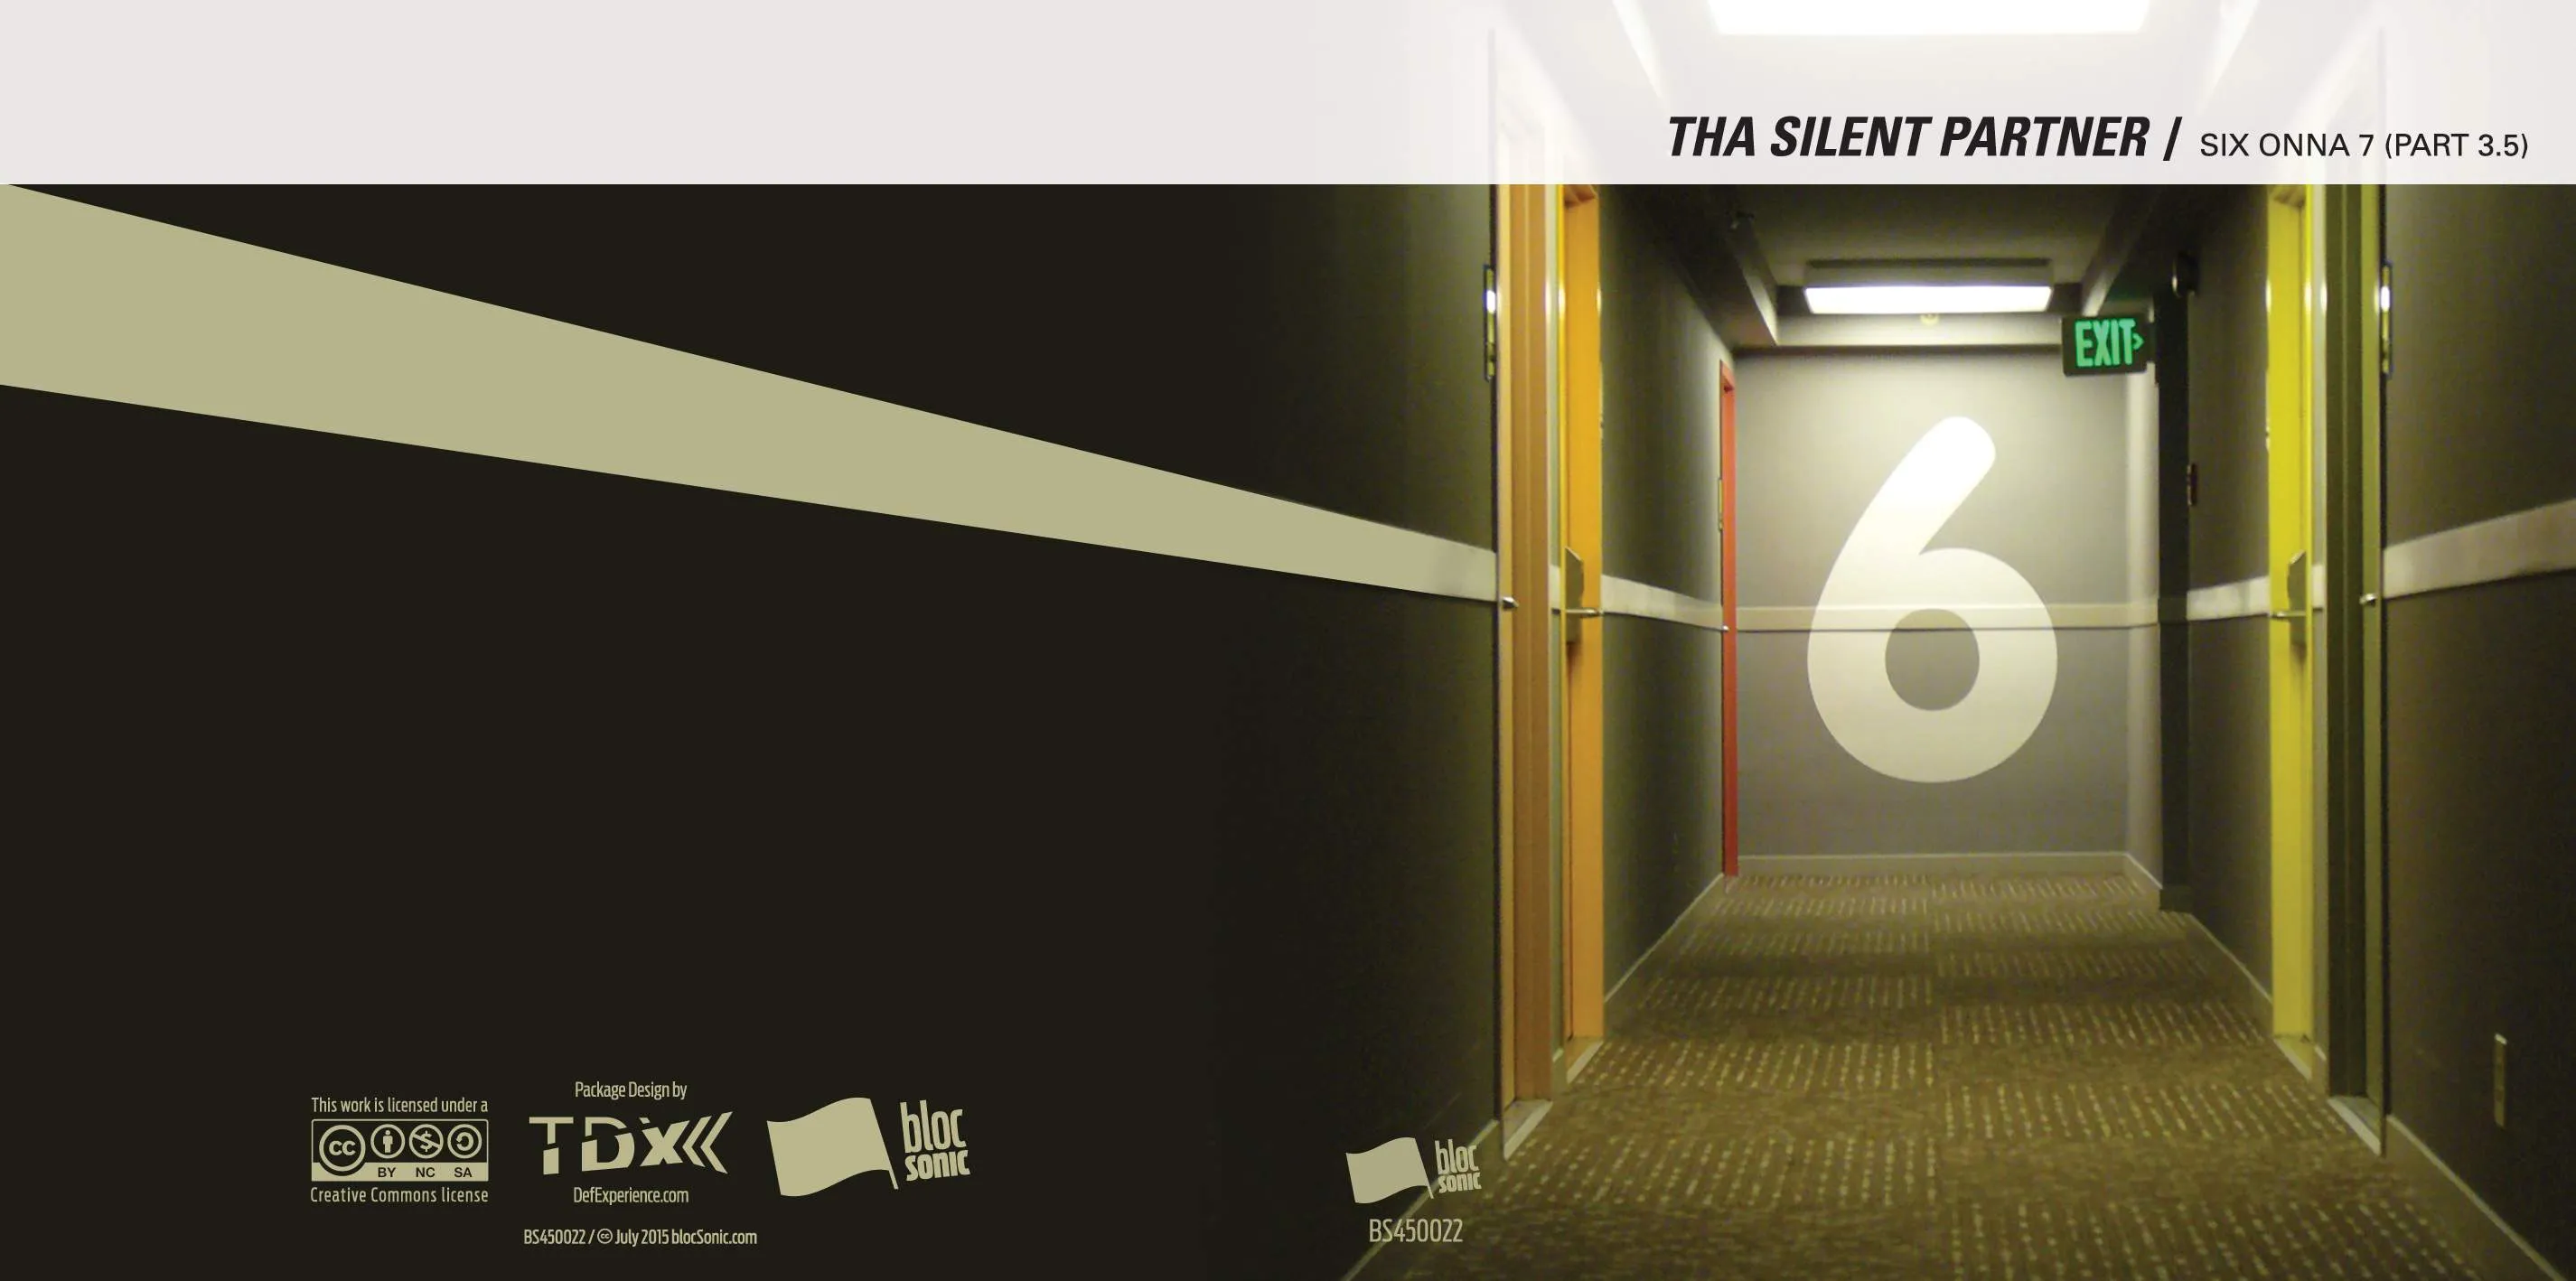 Album insert for “SIX ONNA 7 (Part 3.5)” by Tha Silent Partner